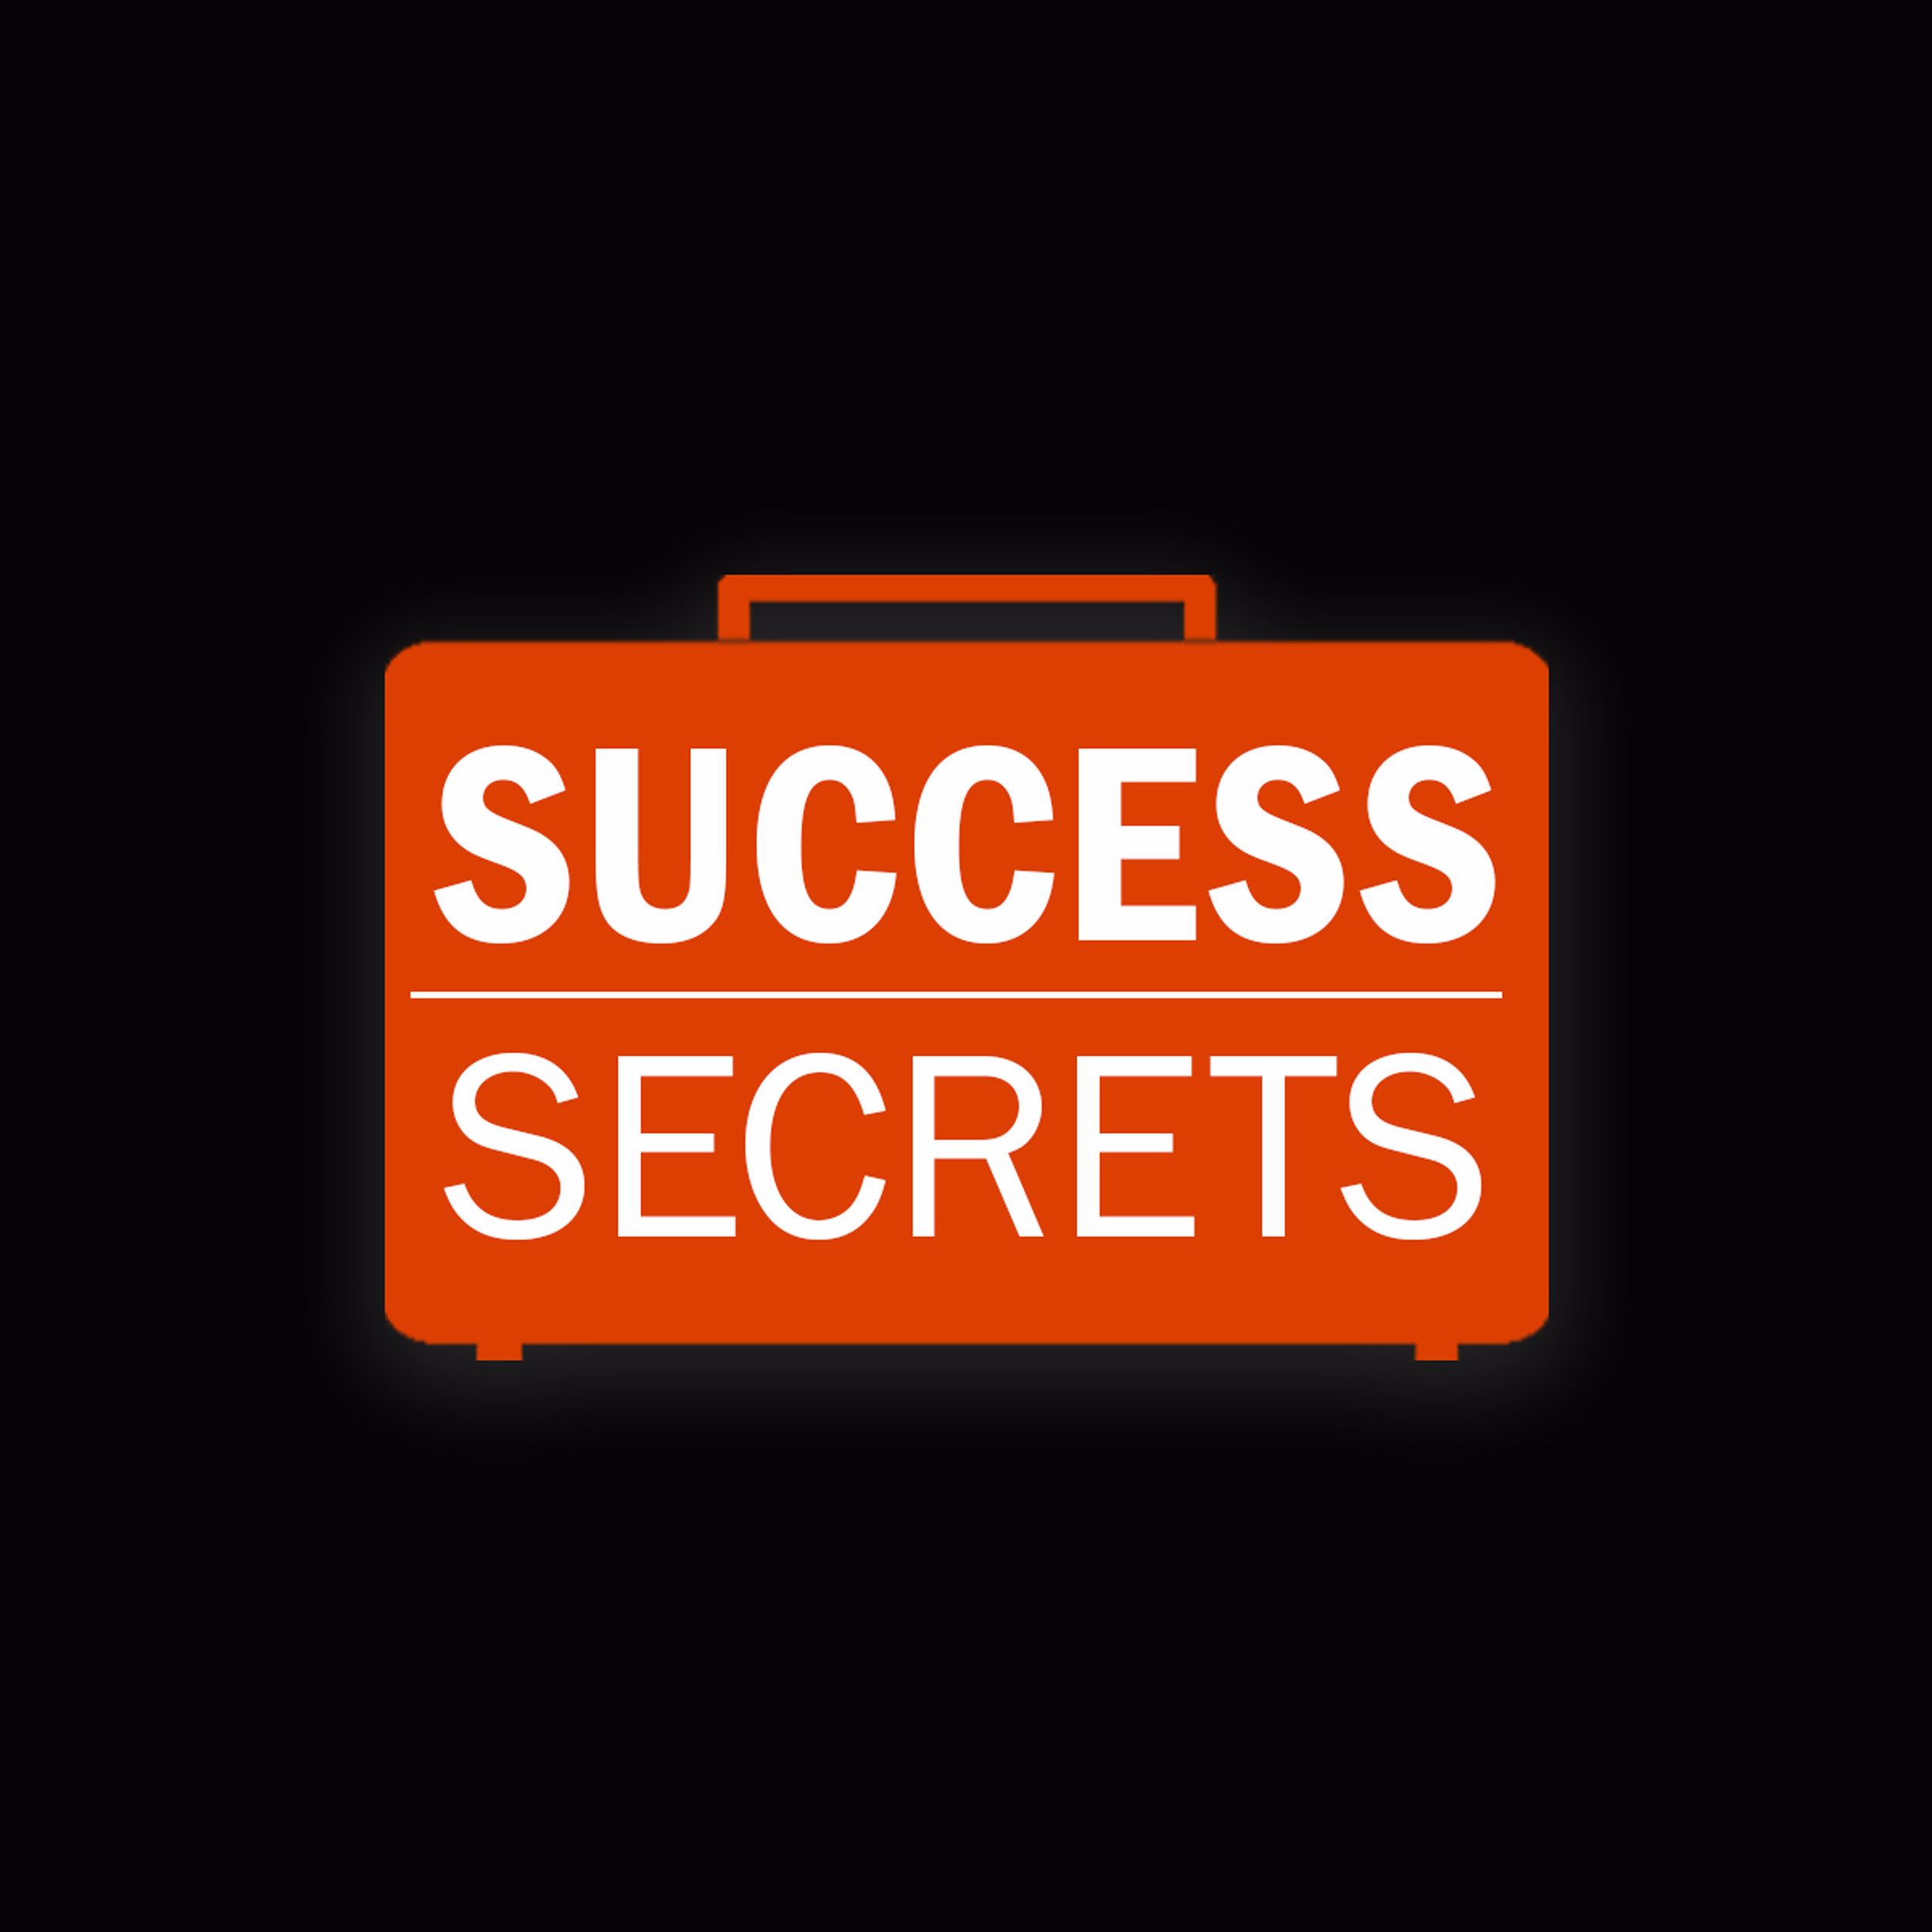 SUCCESS SECRETS